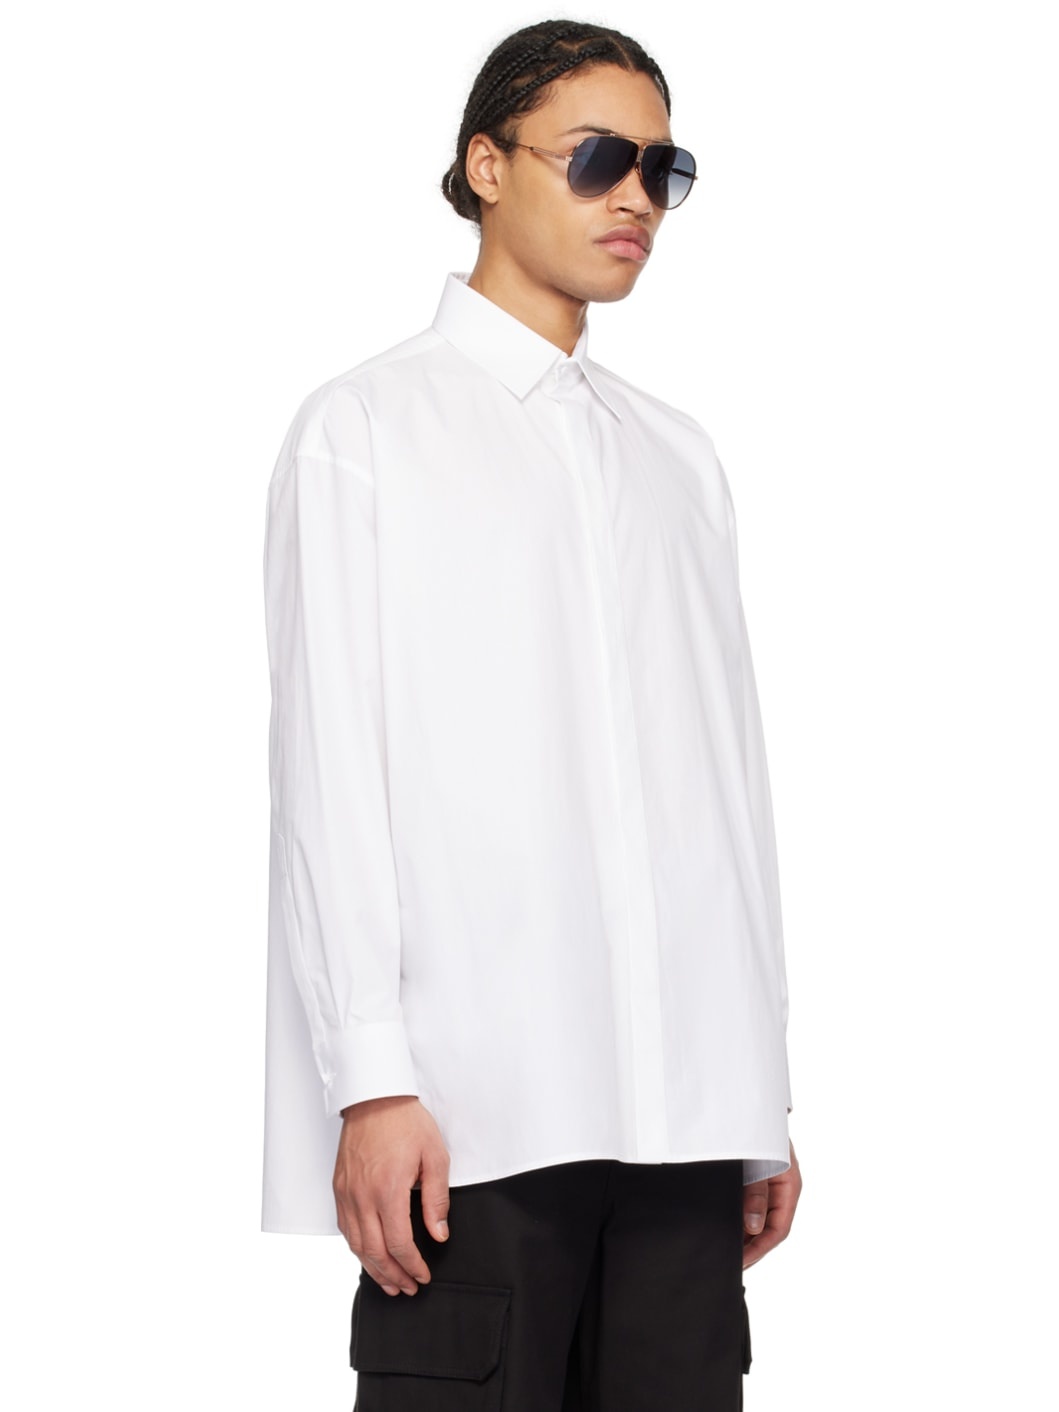 White Spread Collar Shirt - 2